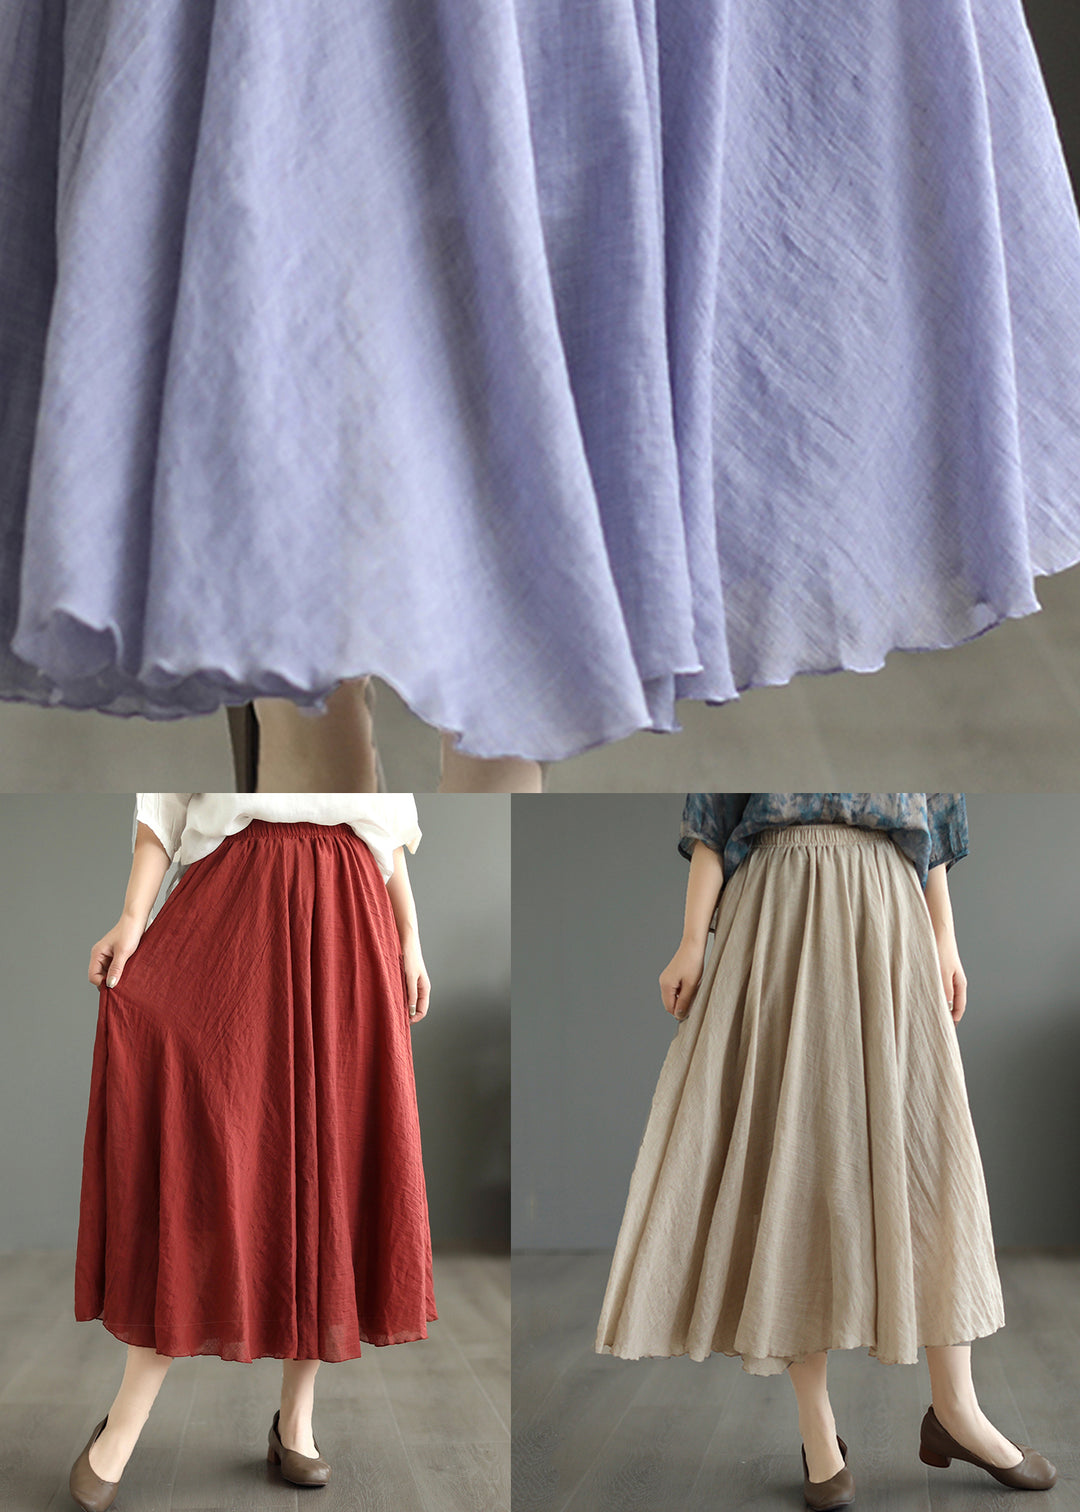 Khaki High Waist Patchwork Cotton Skirt Wrinkled Fall